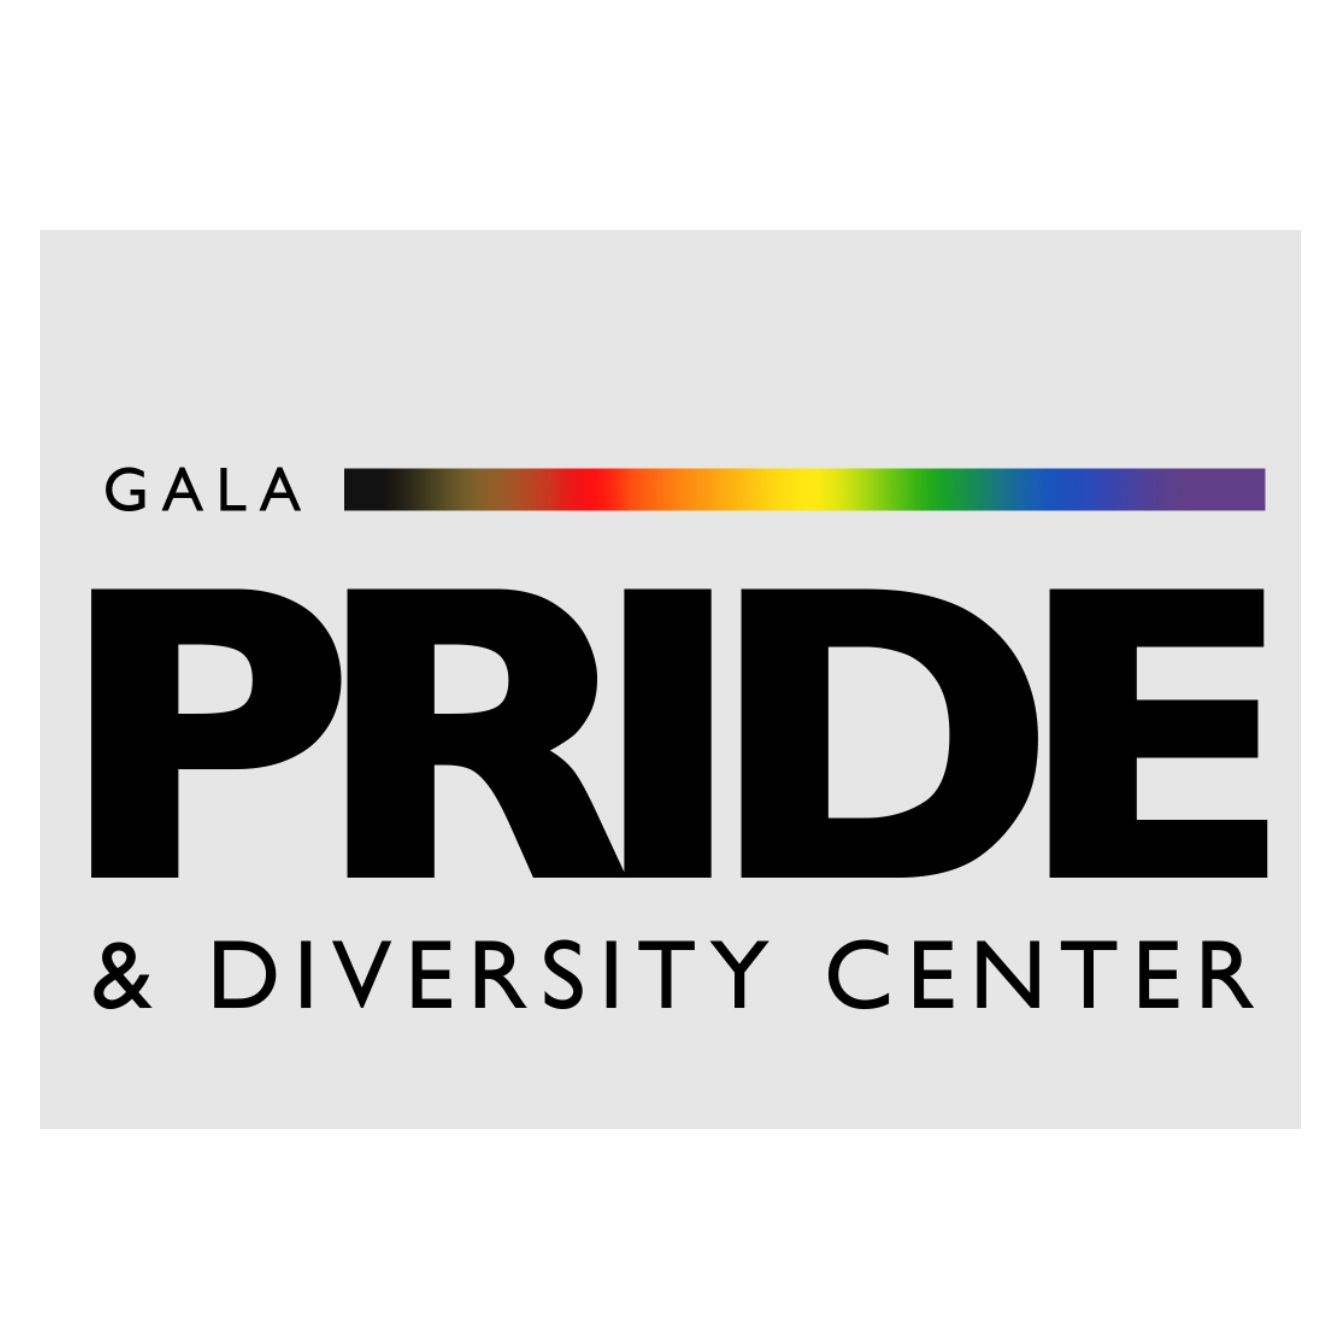 LGBTQ Organization in San Francisco California - Gala Pride and Diversity Center